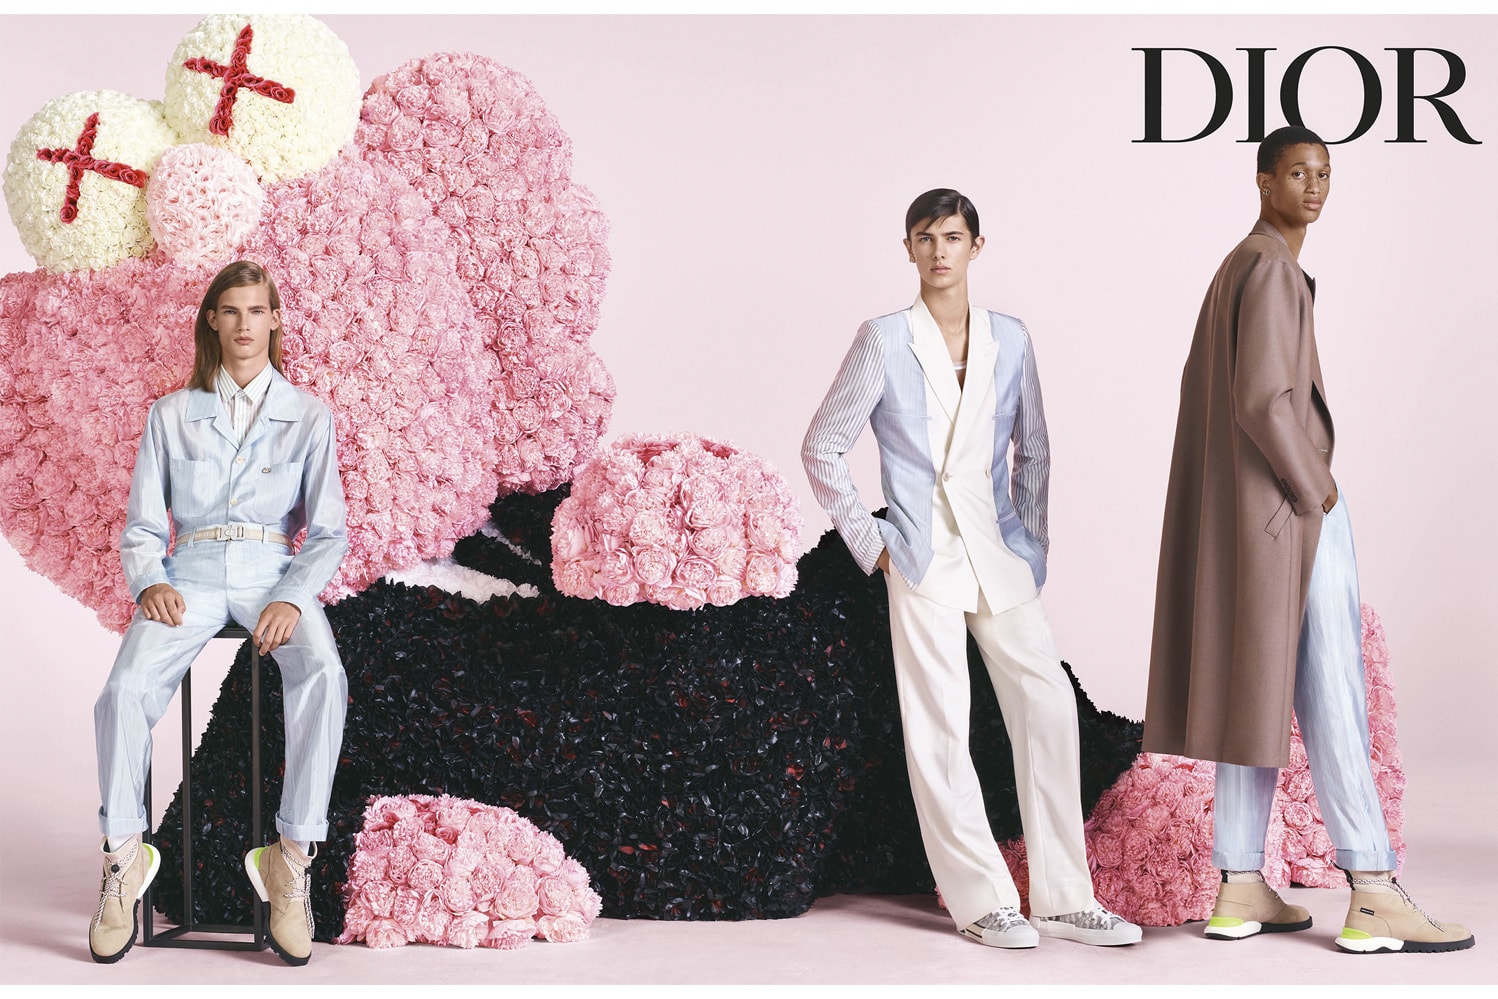 KAWS BFF Dior Homme Spring/Summer 2019 Campaign kim jones men's collection fashion designer sculpture pink